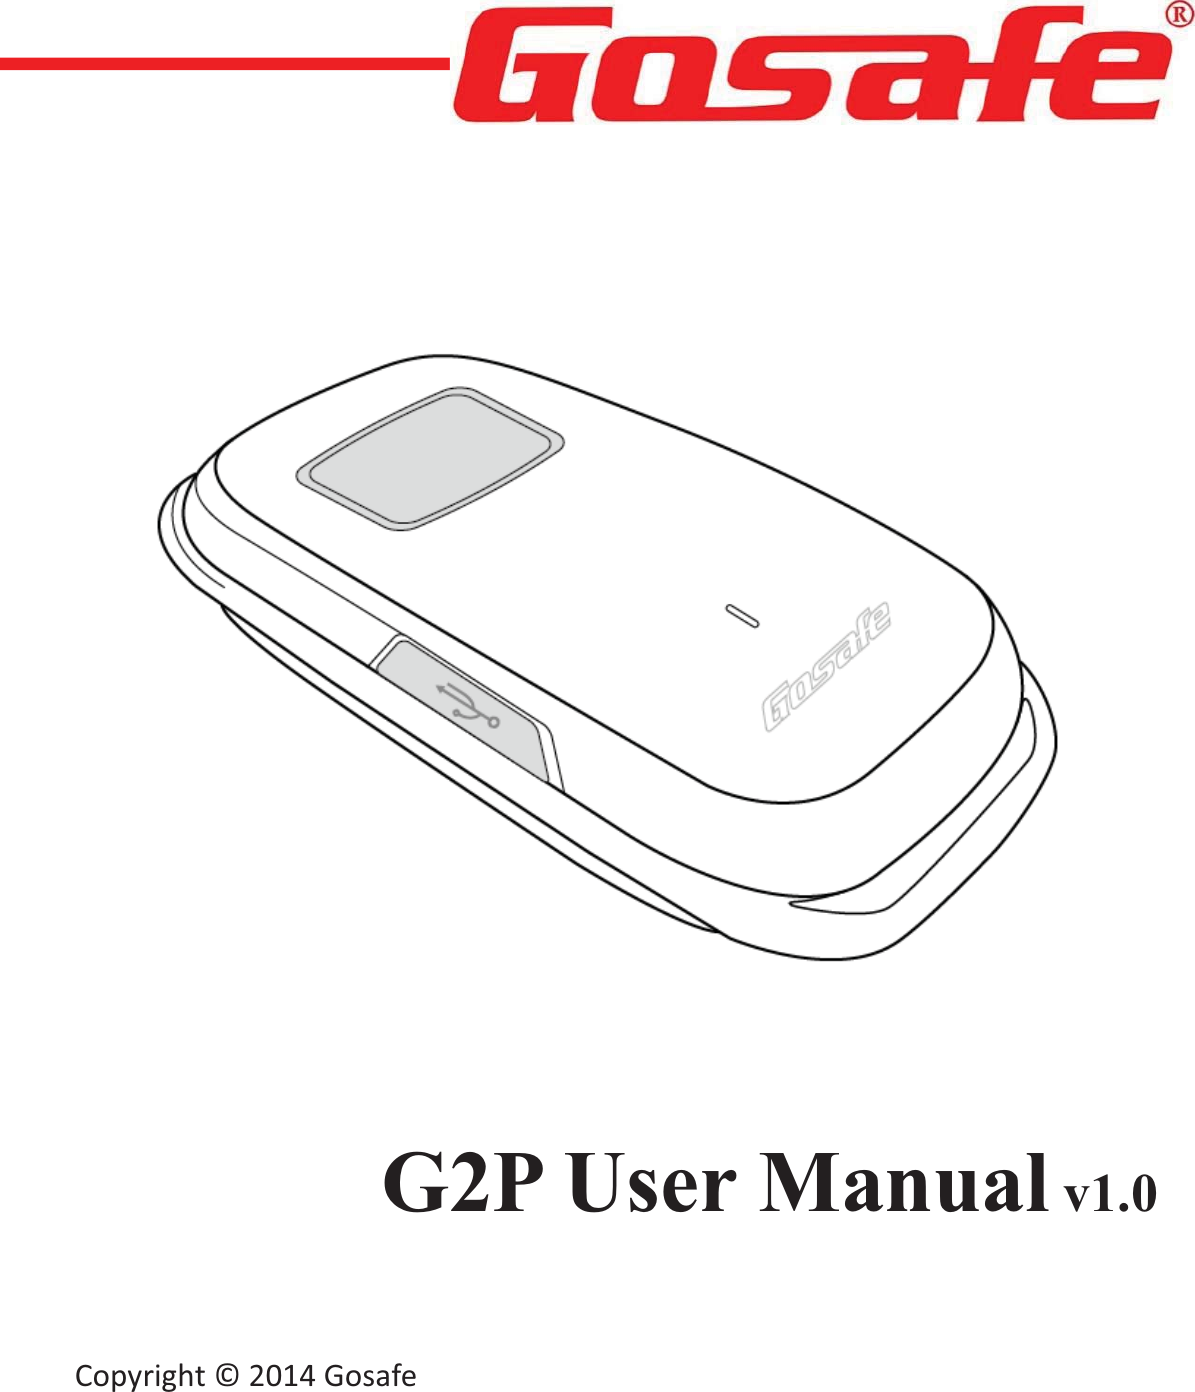             G2P User Manual v1.0                                 Copyright © 2014 Gosafe 